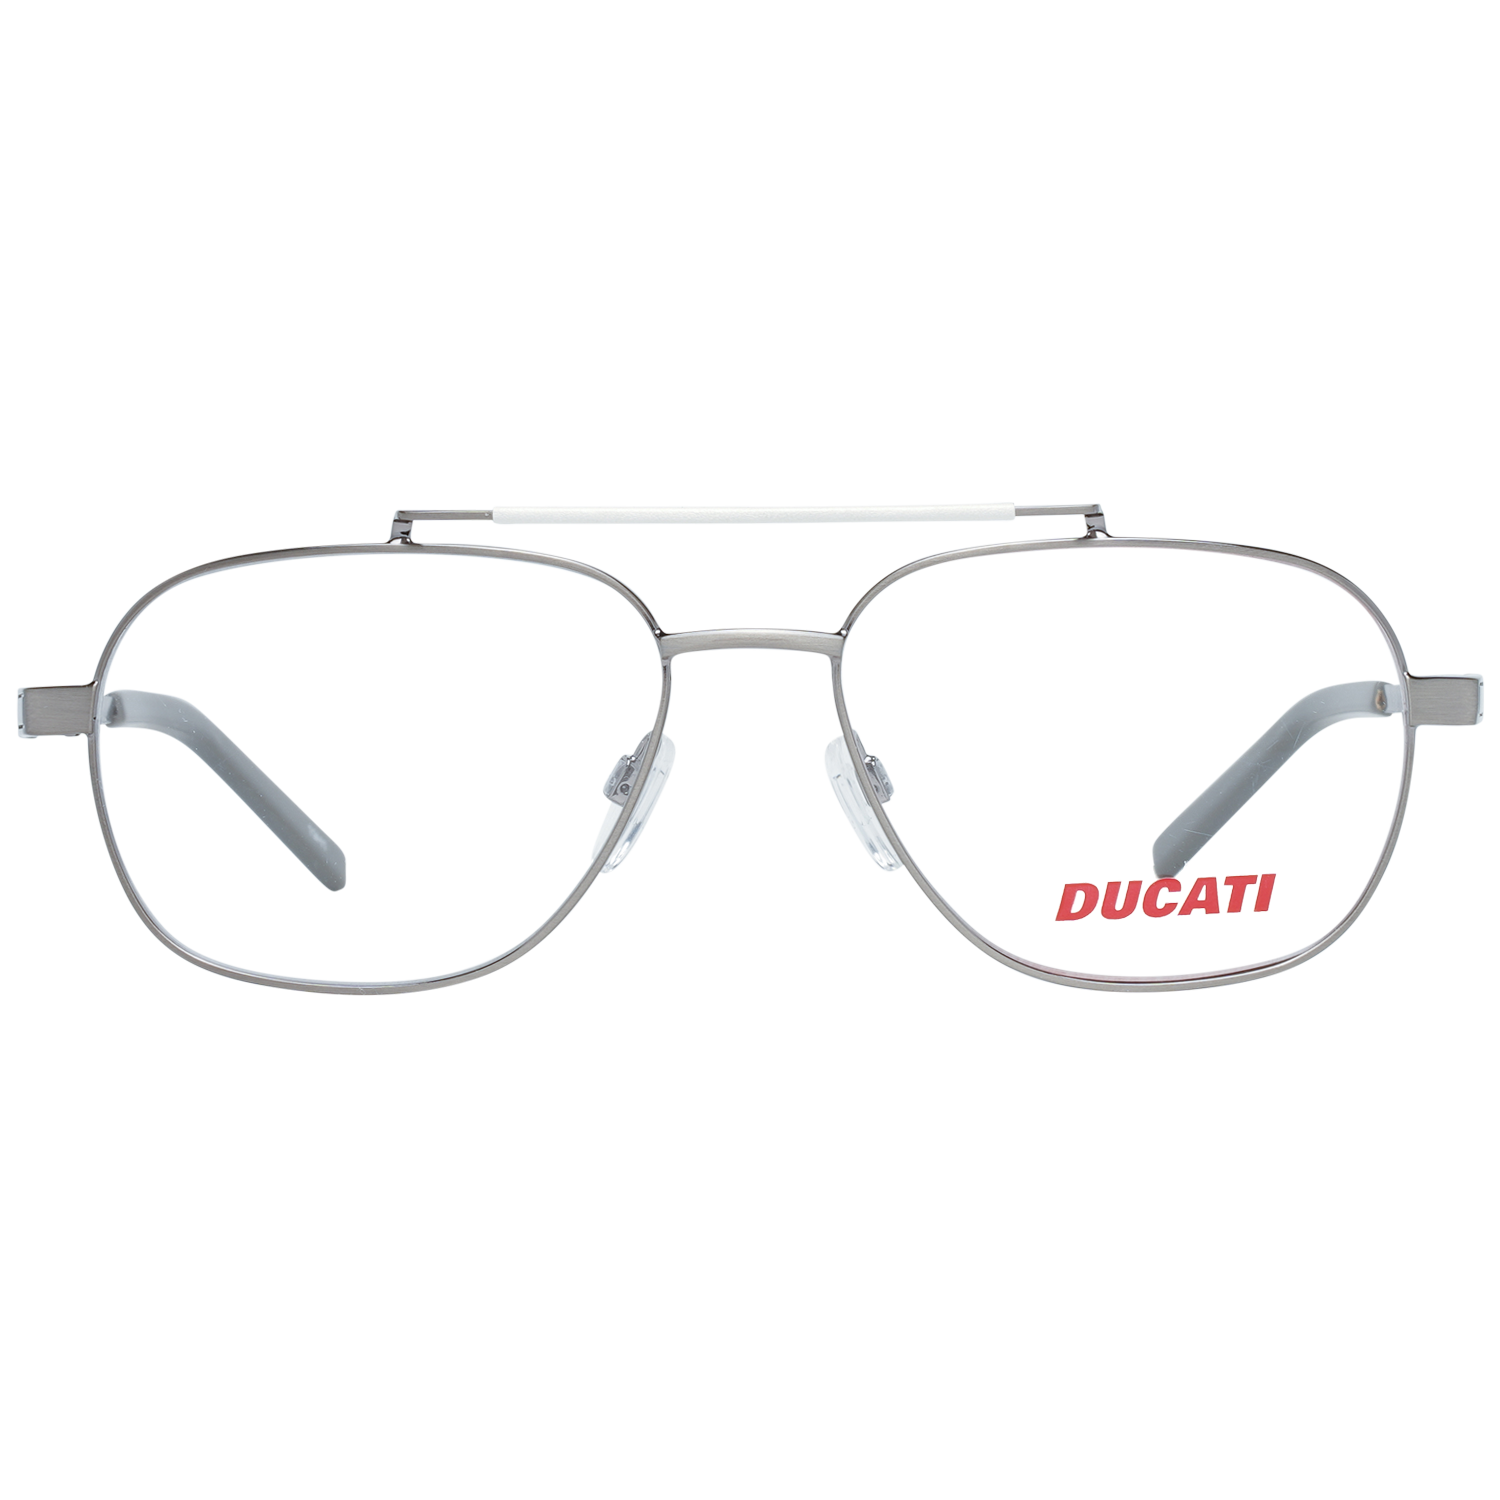 Ducati Frames Ducati Optical Frame DA3018 938 56 Eyeglasses Eyewear UK USA Australia 